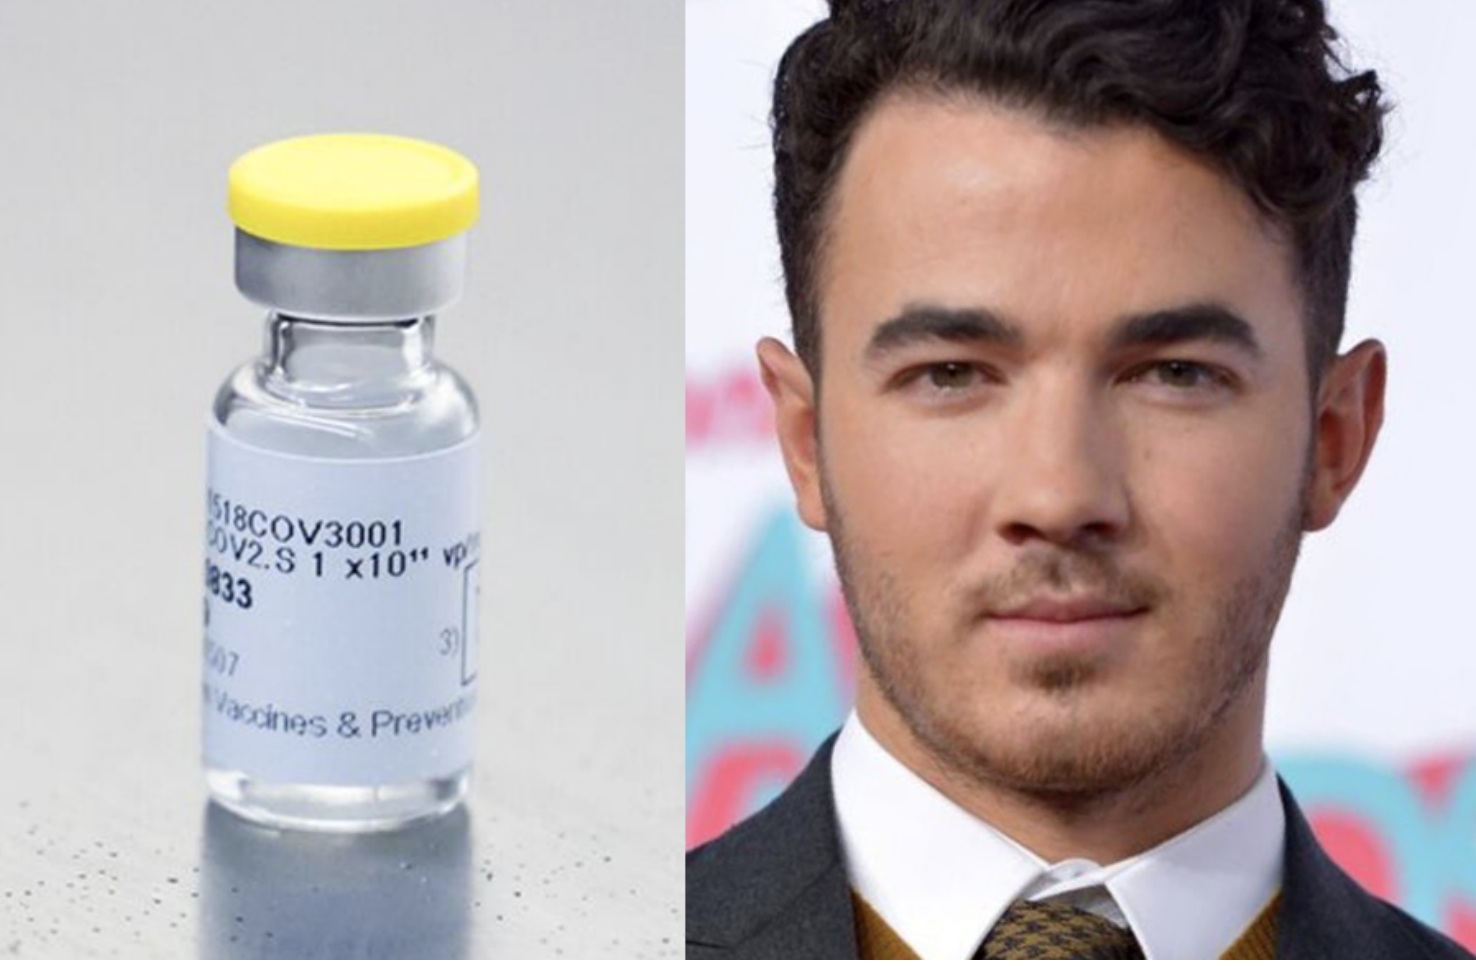 Split image of Kevin Jonas and vaccine vial